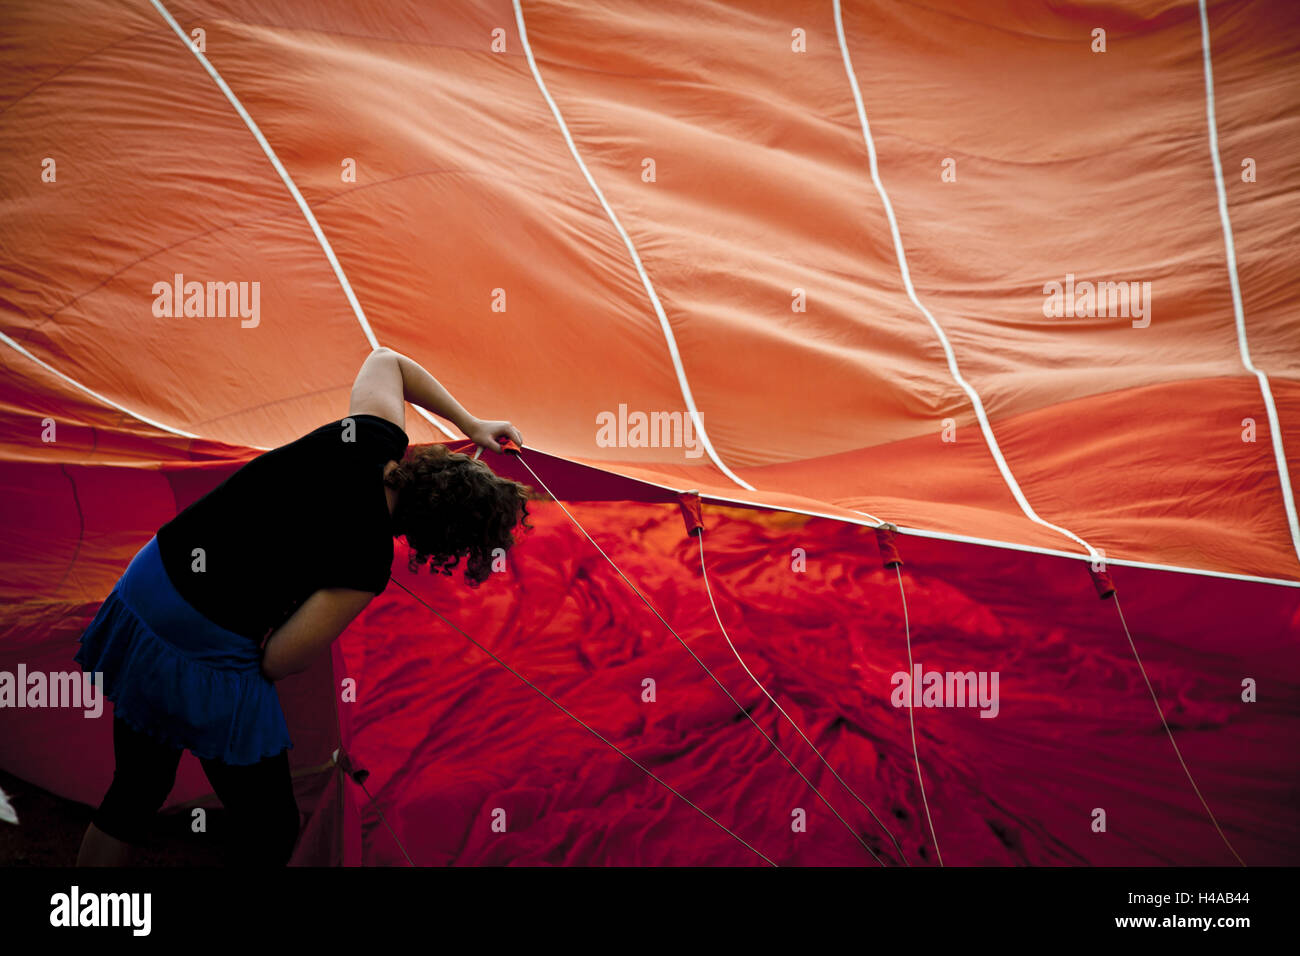 Balloon festival in Igualada, Barcelona, Spain, Stock Photo